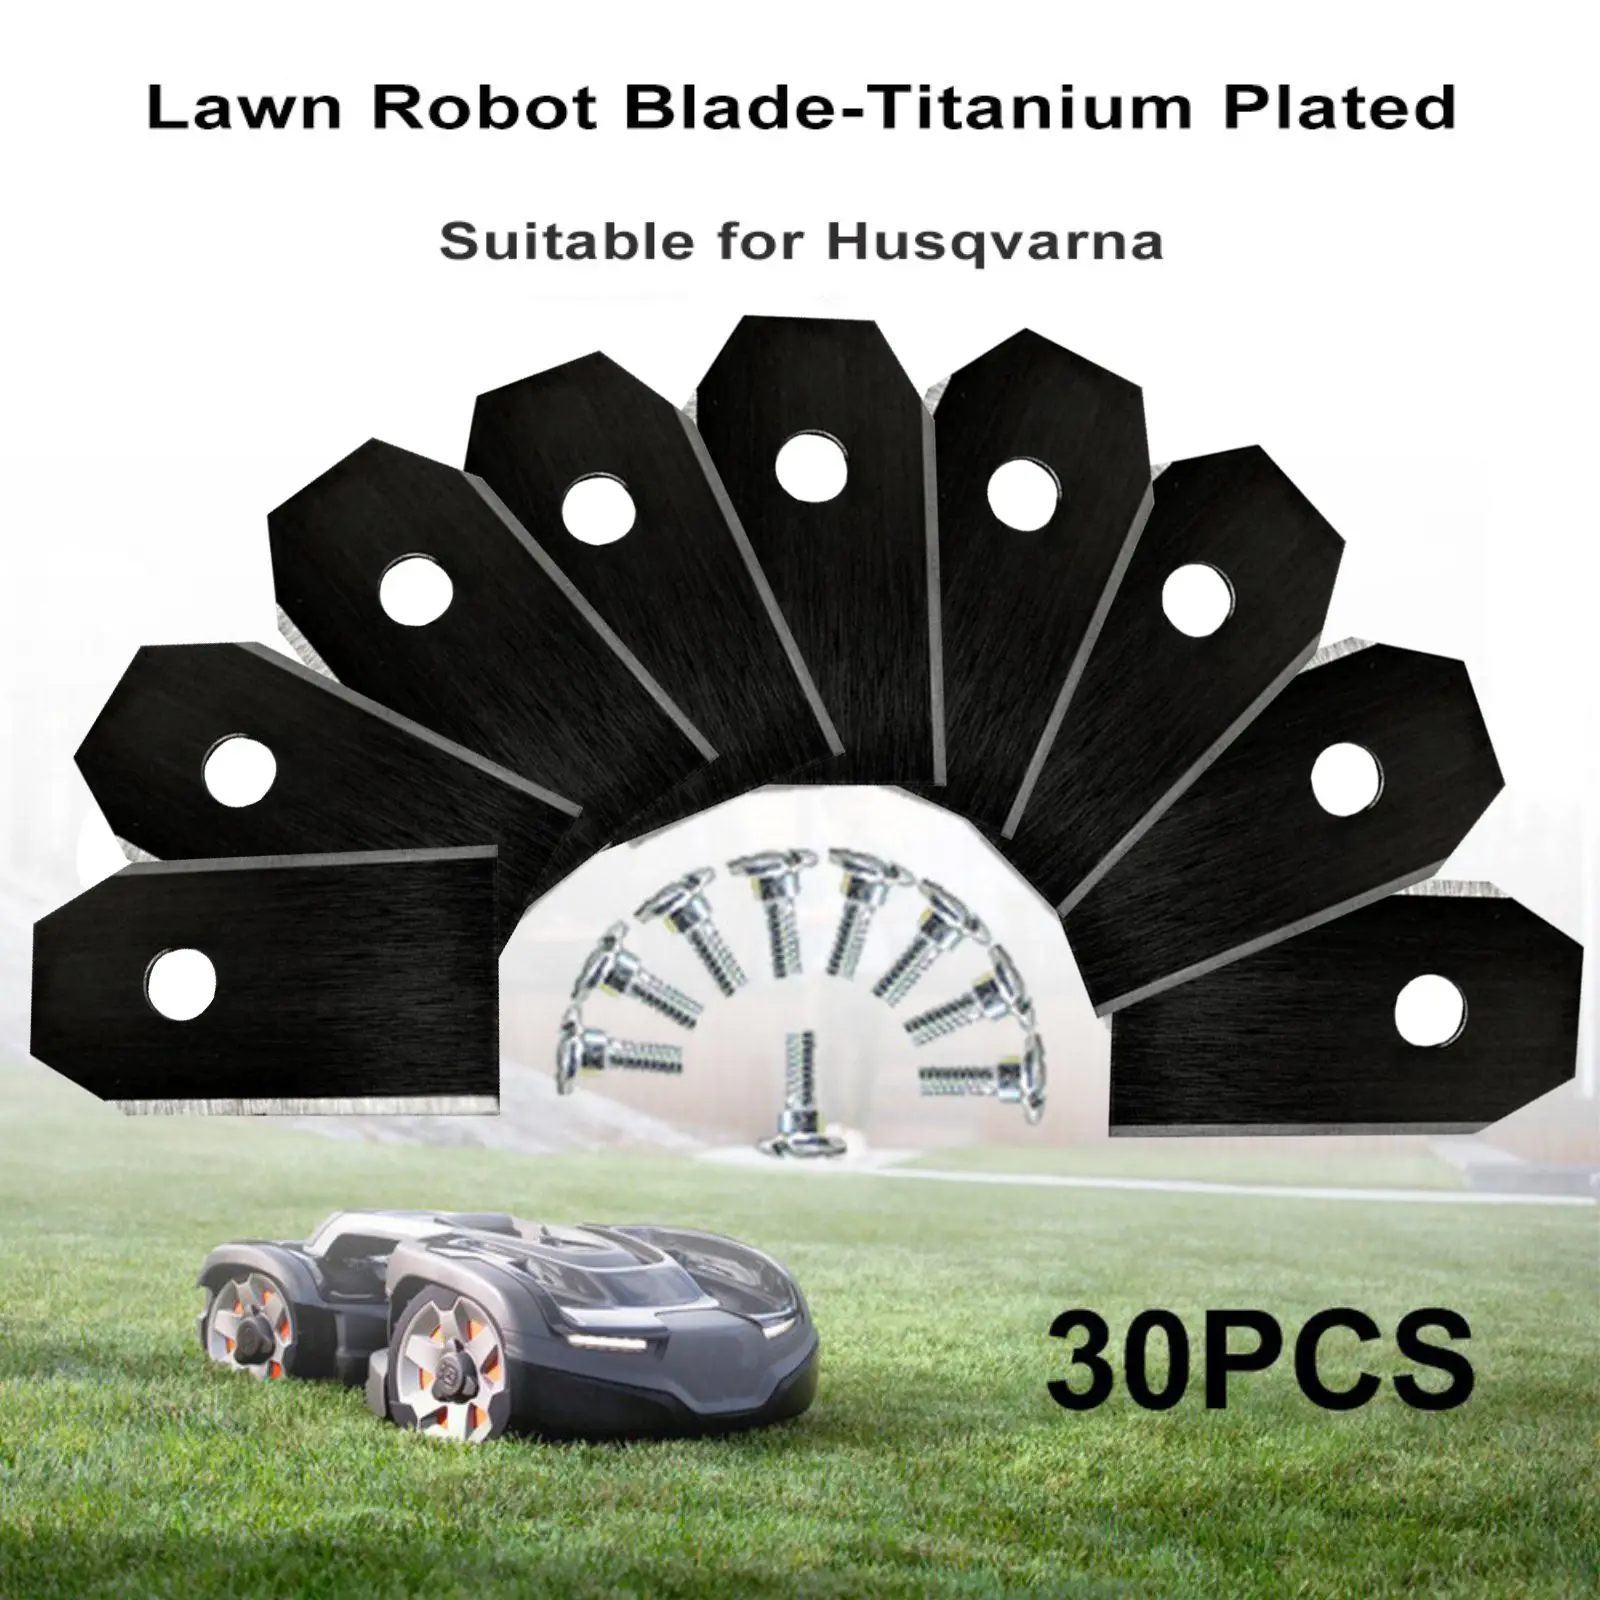 

30PCS Trimmer Blade Lawn Mower Grass Replacement Trimmer Cutter Piece for Husqvarna Automower/Gardena Robotic Lawnmower